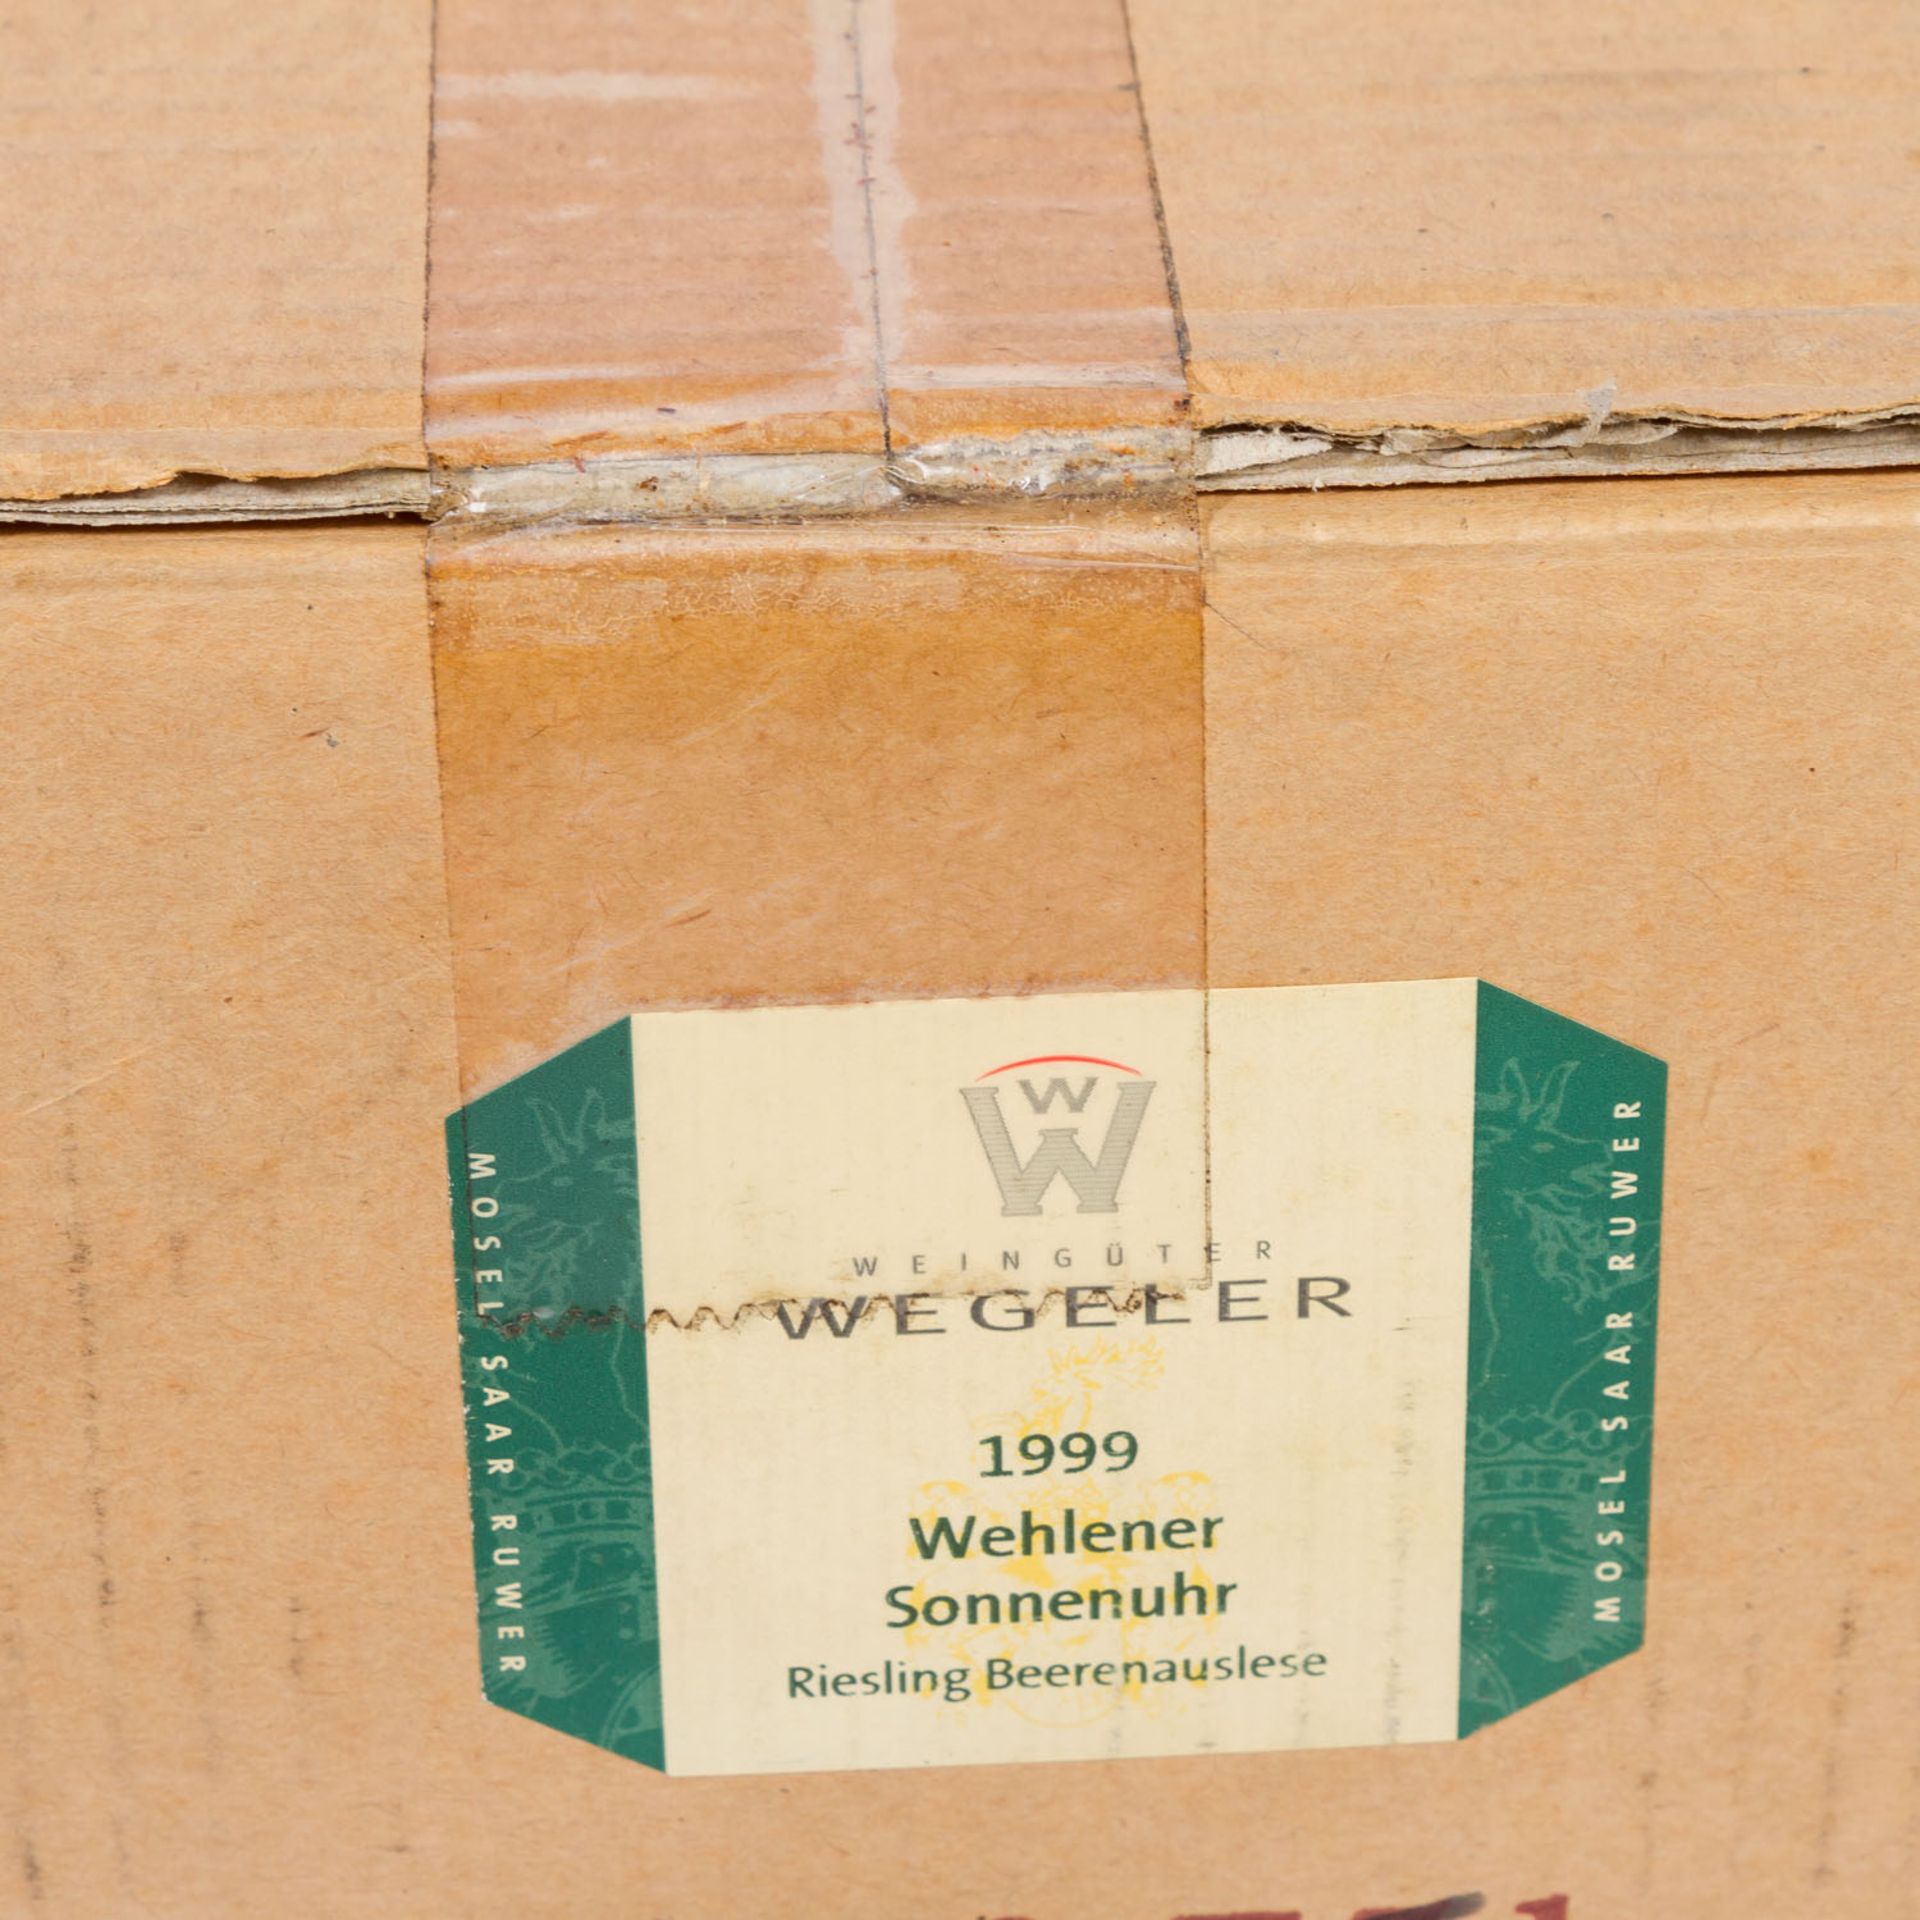 GEHEIMRAT J. WEGELER 6 halbe Flaschen WEHLENER-SONNENUHR RIESLING BEERENAUSLESE 1999 - Image 2 of 2